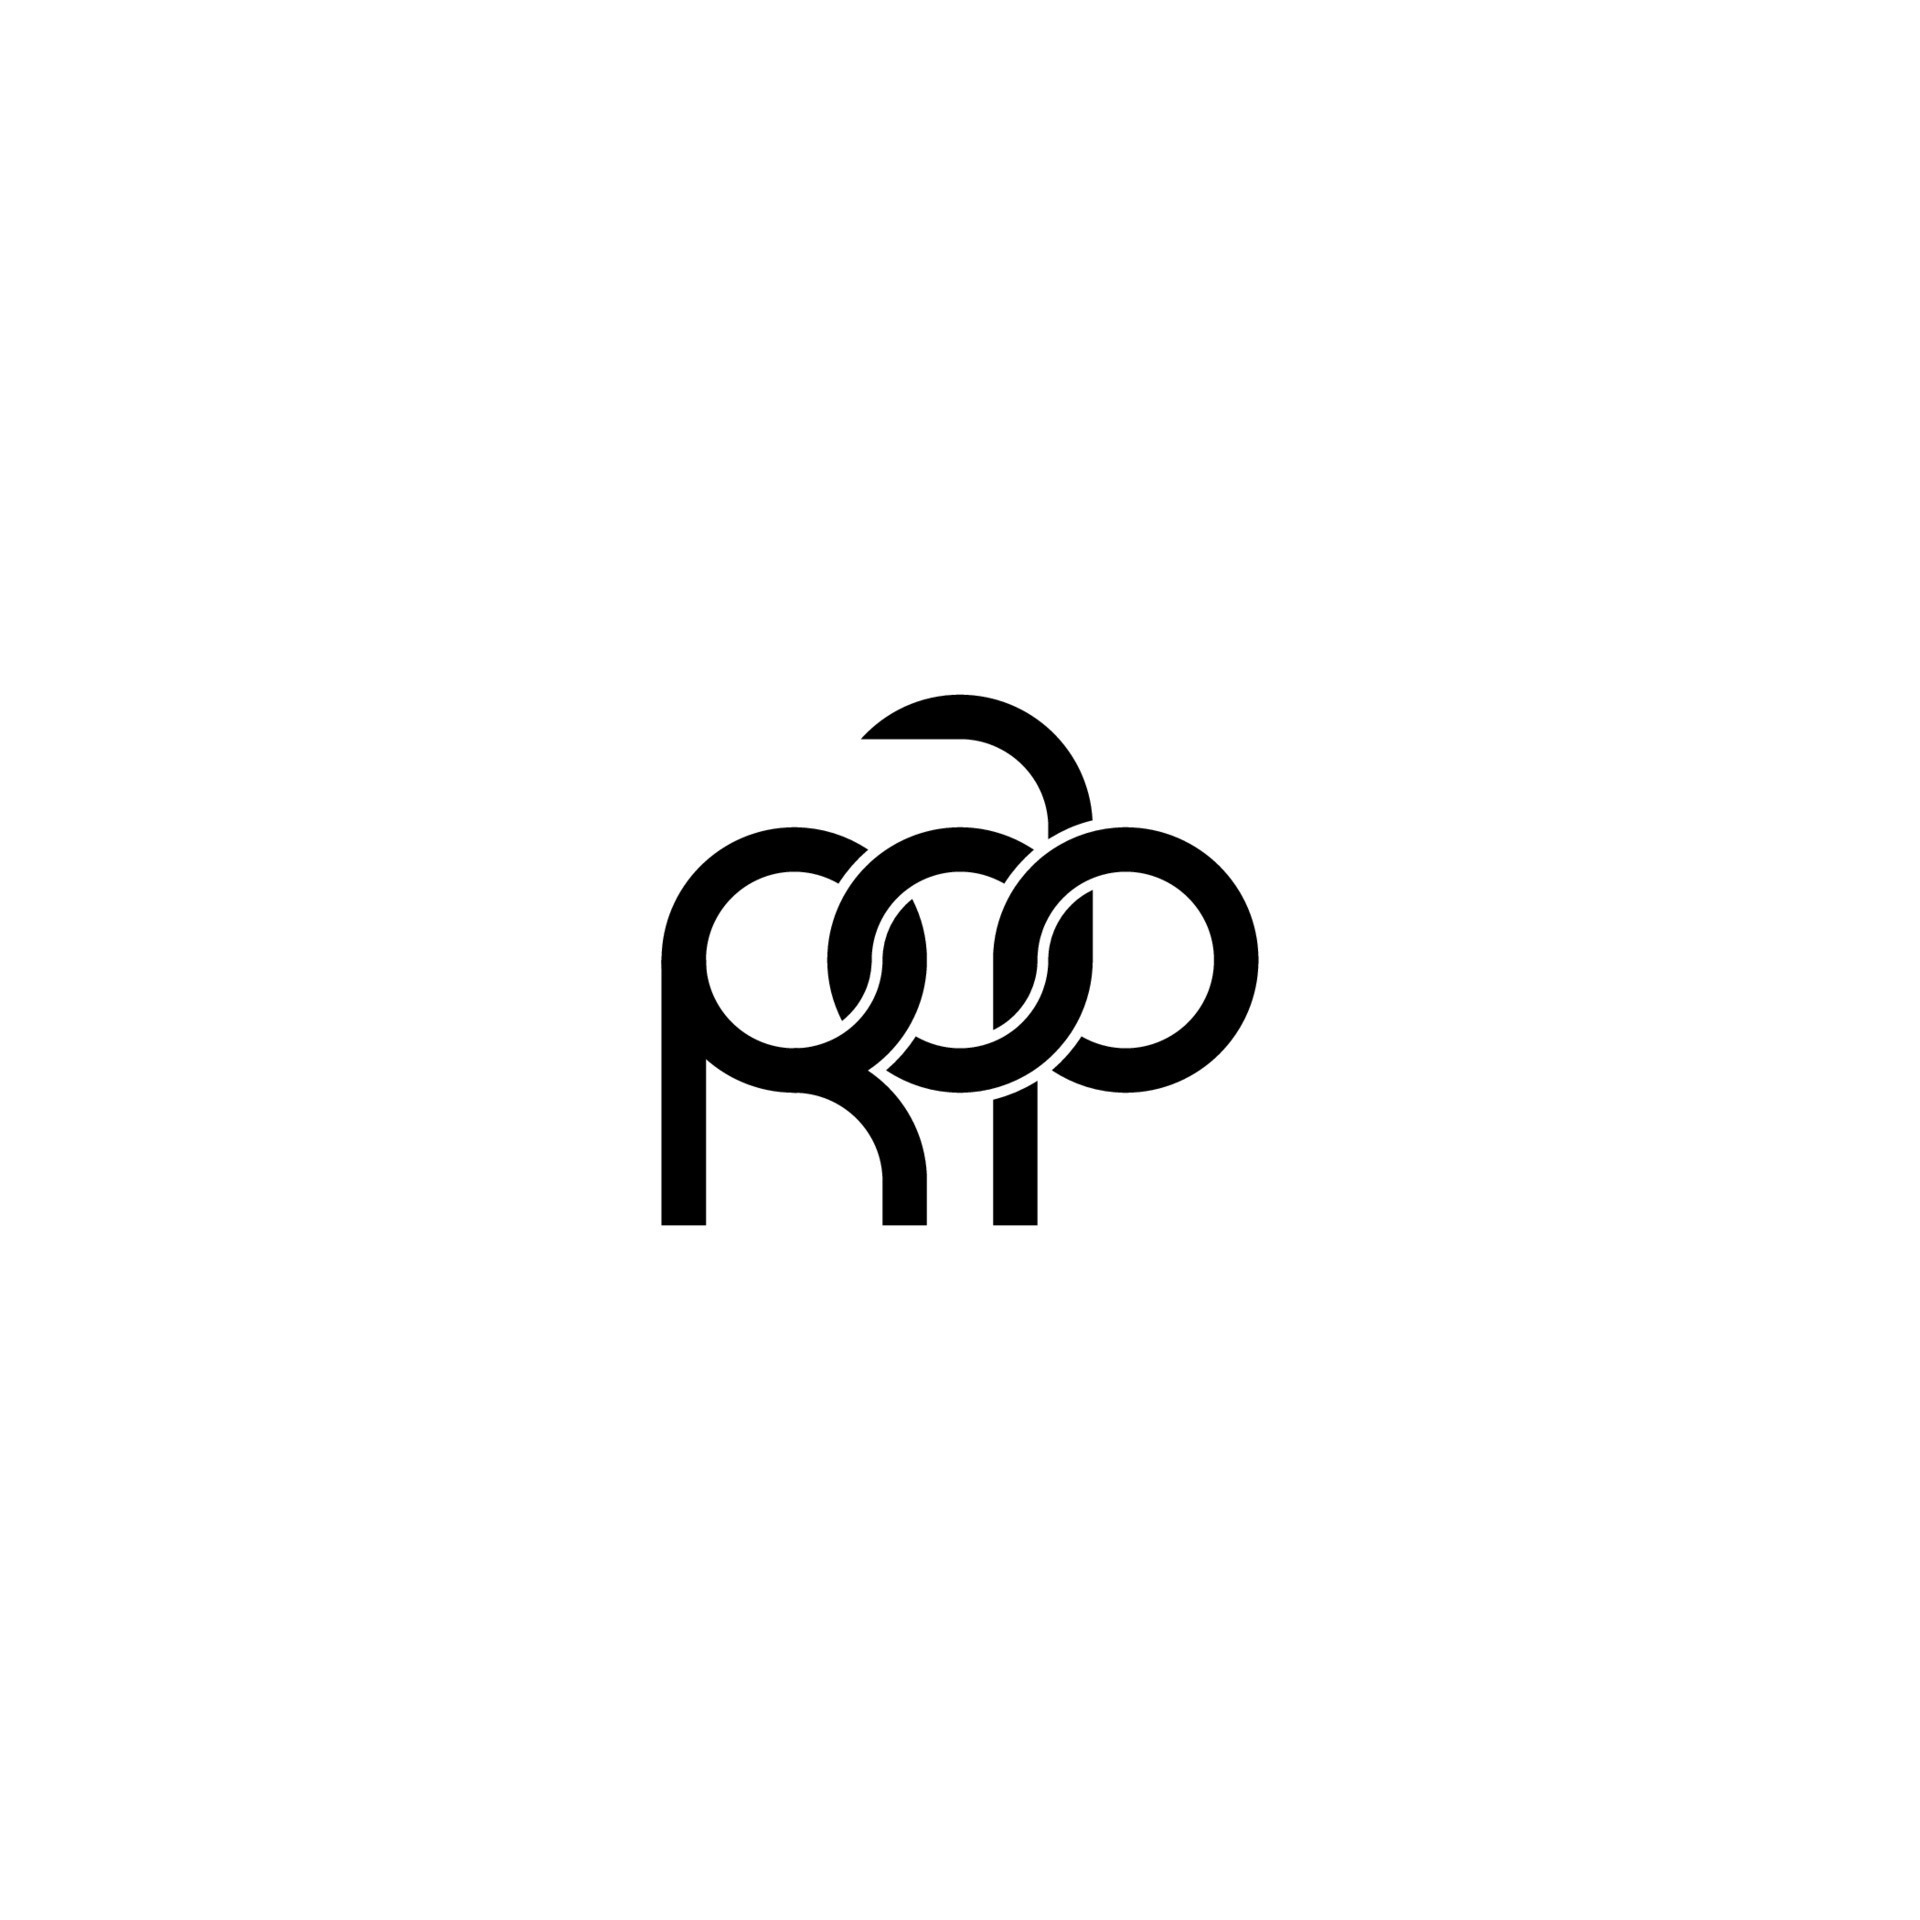 https://static.vecteezy.com/system/resources/previews/016/376/874/original/letters-rap-logo-simple-modern-clean-vector.jpg